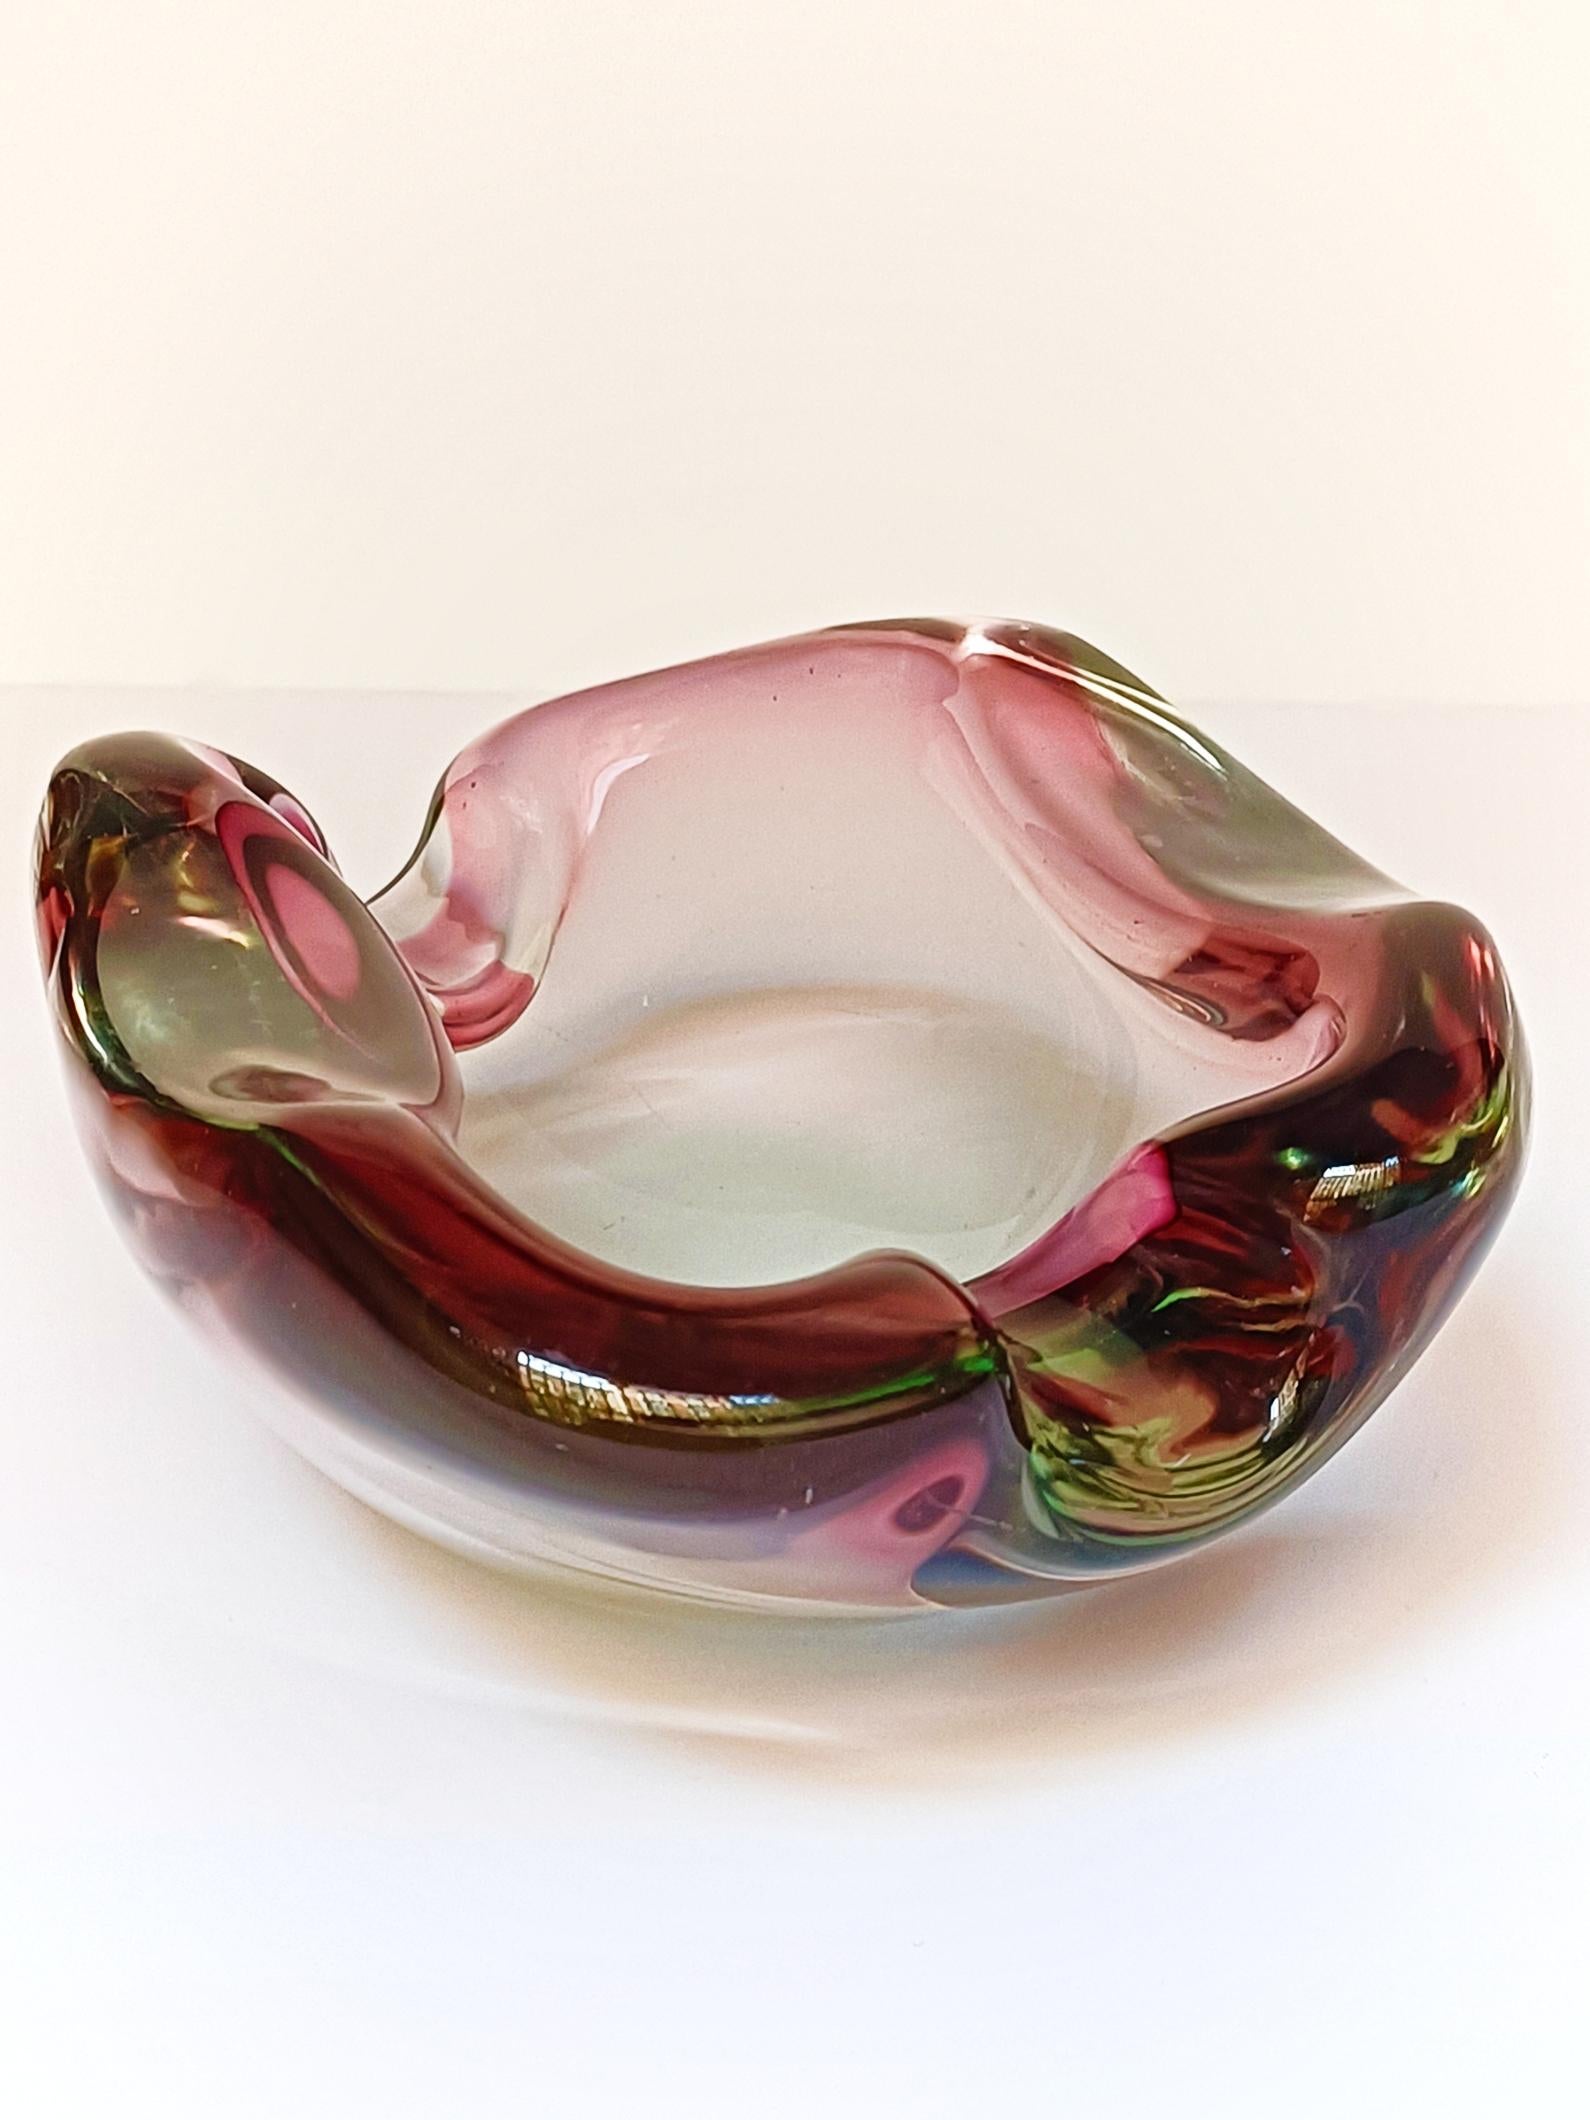 Flavio Poli für Seguso Vetri d'Arte Sommerso Murano Glass Schale, Italien, 1950er Jahre (Sommerso-Glas) im Angebot